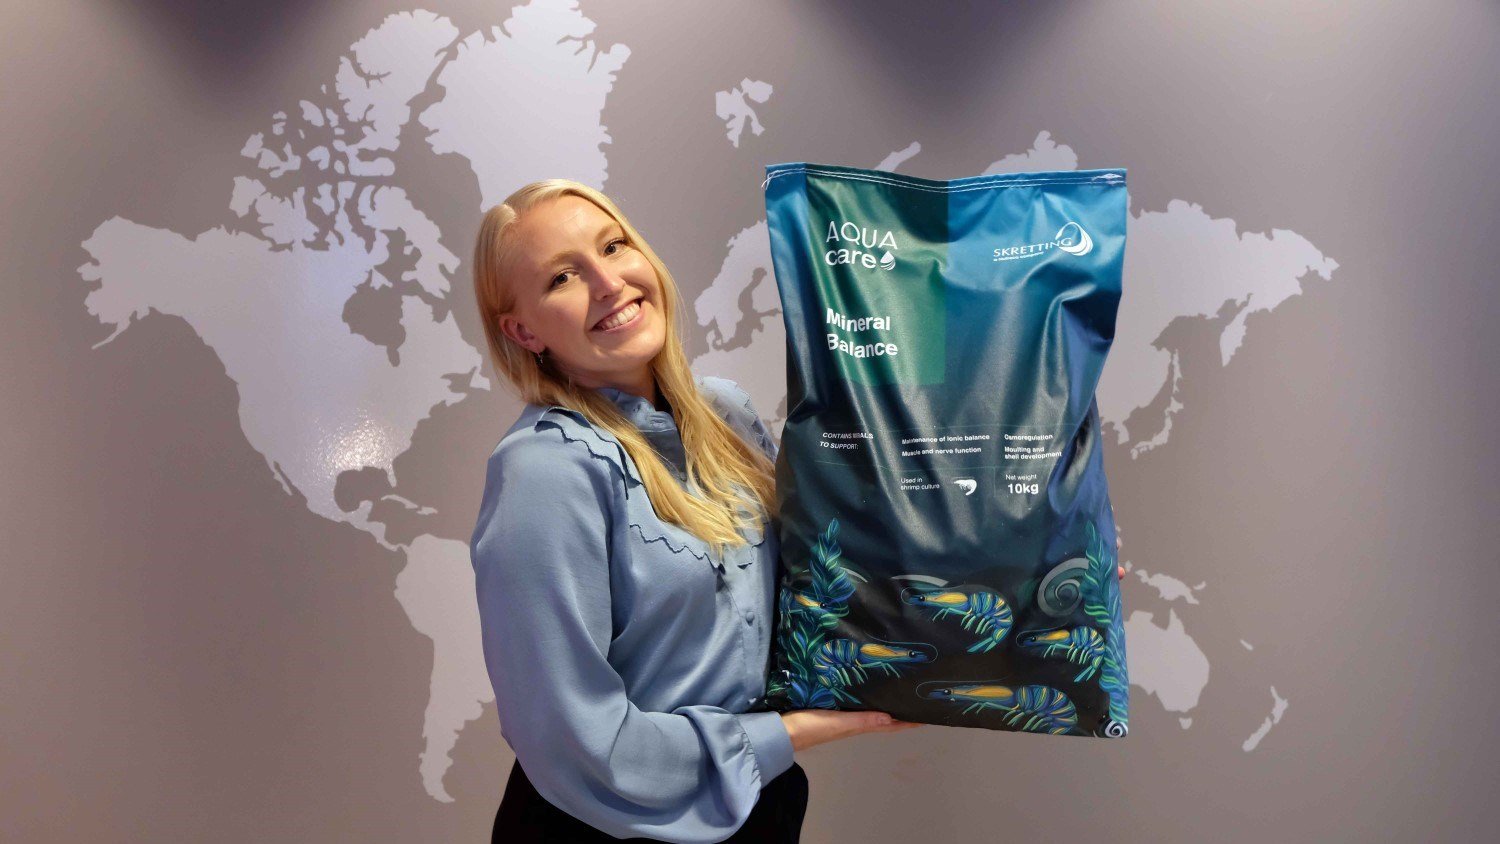 Marita Sirevaag holding an AquaCare bag